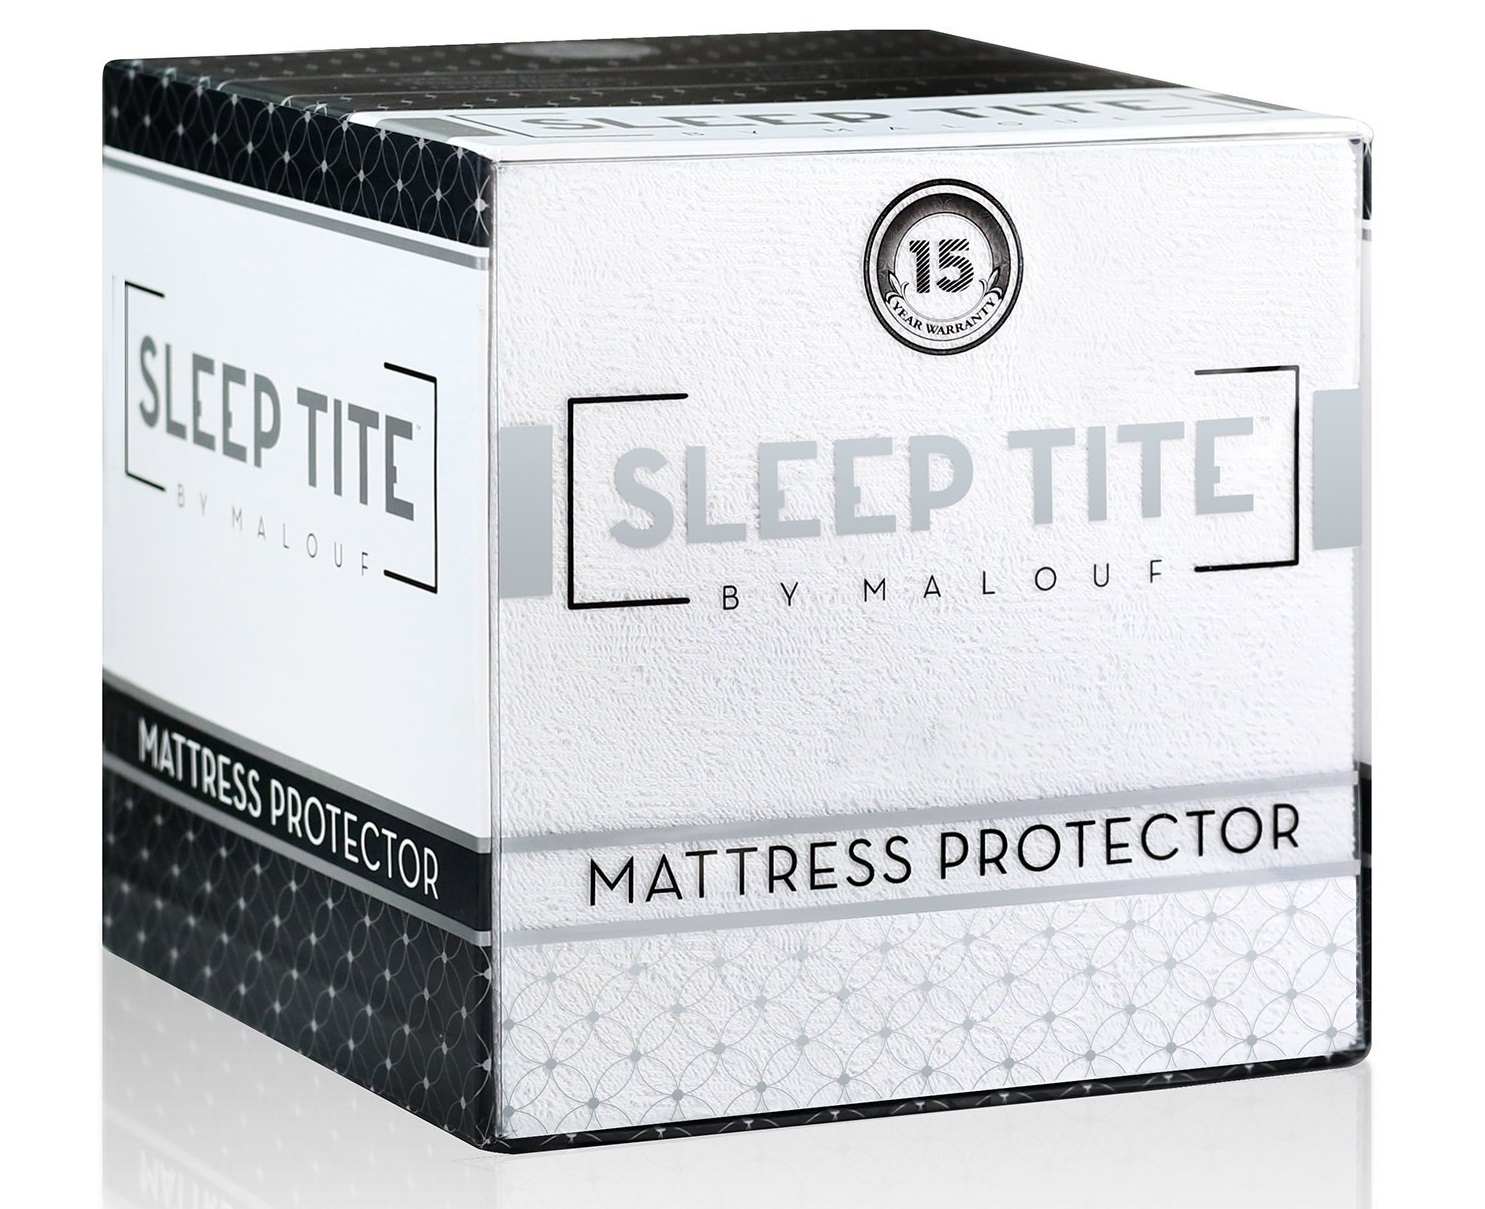 sleep tite mattress protector amazon